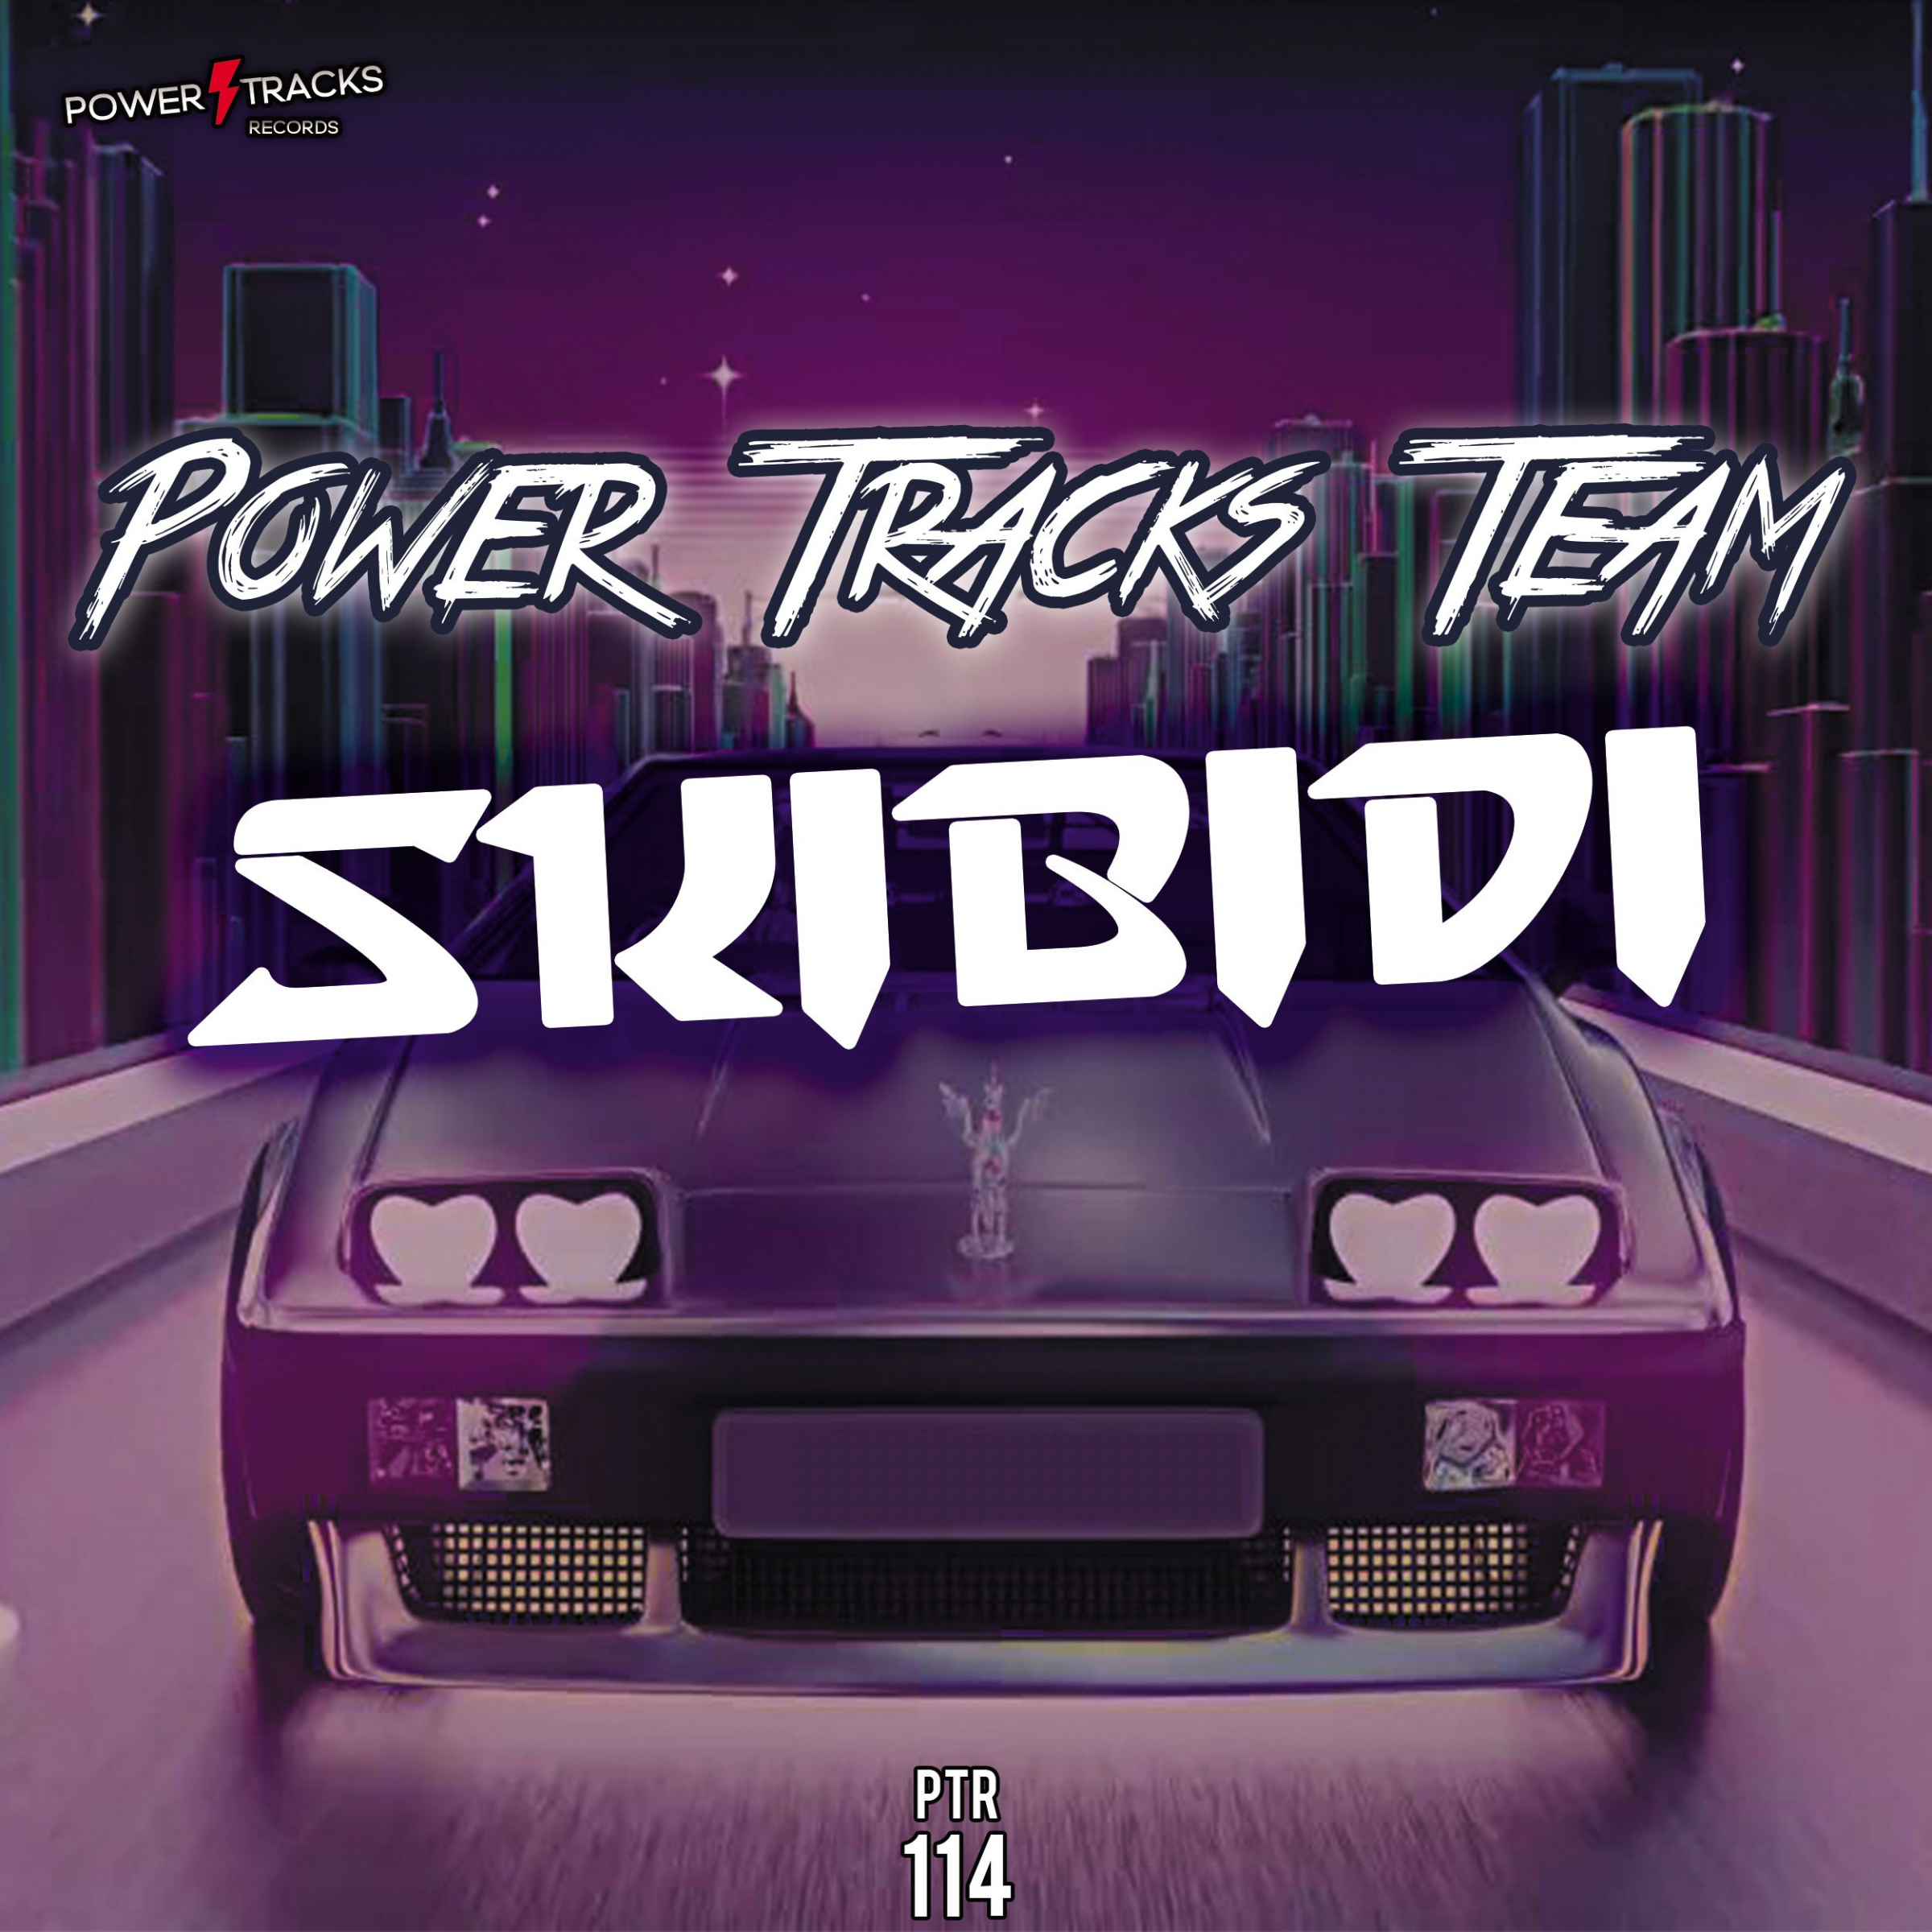 Power tracks. Power песня. Известный трек Power ремикс. Power. Известный трек Power ремикс you can.